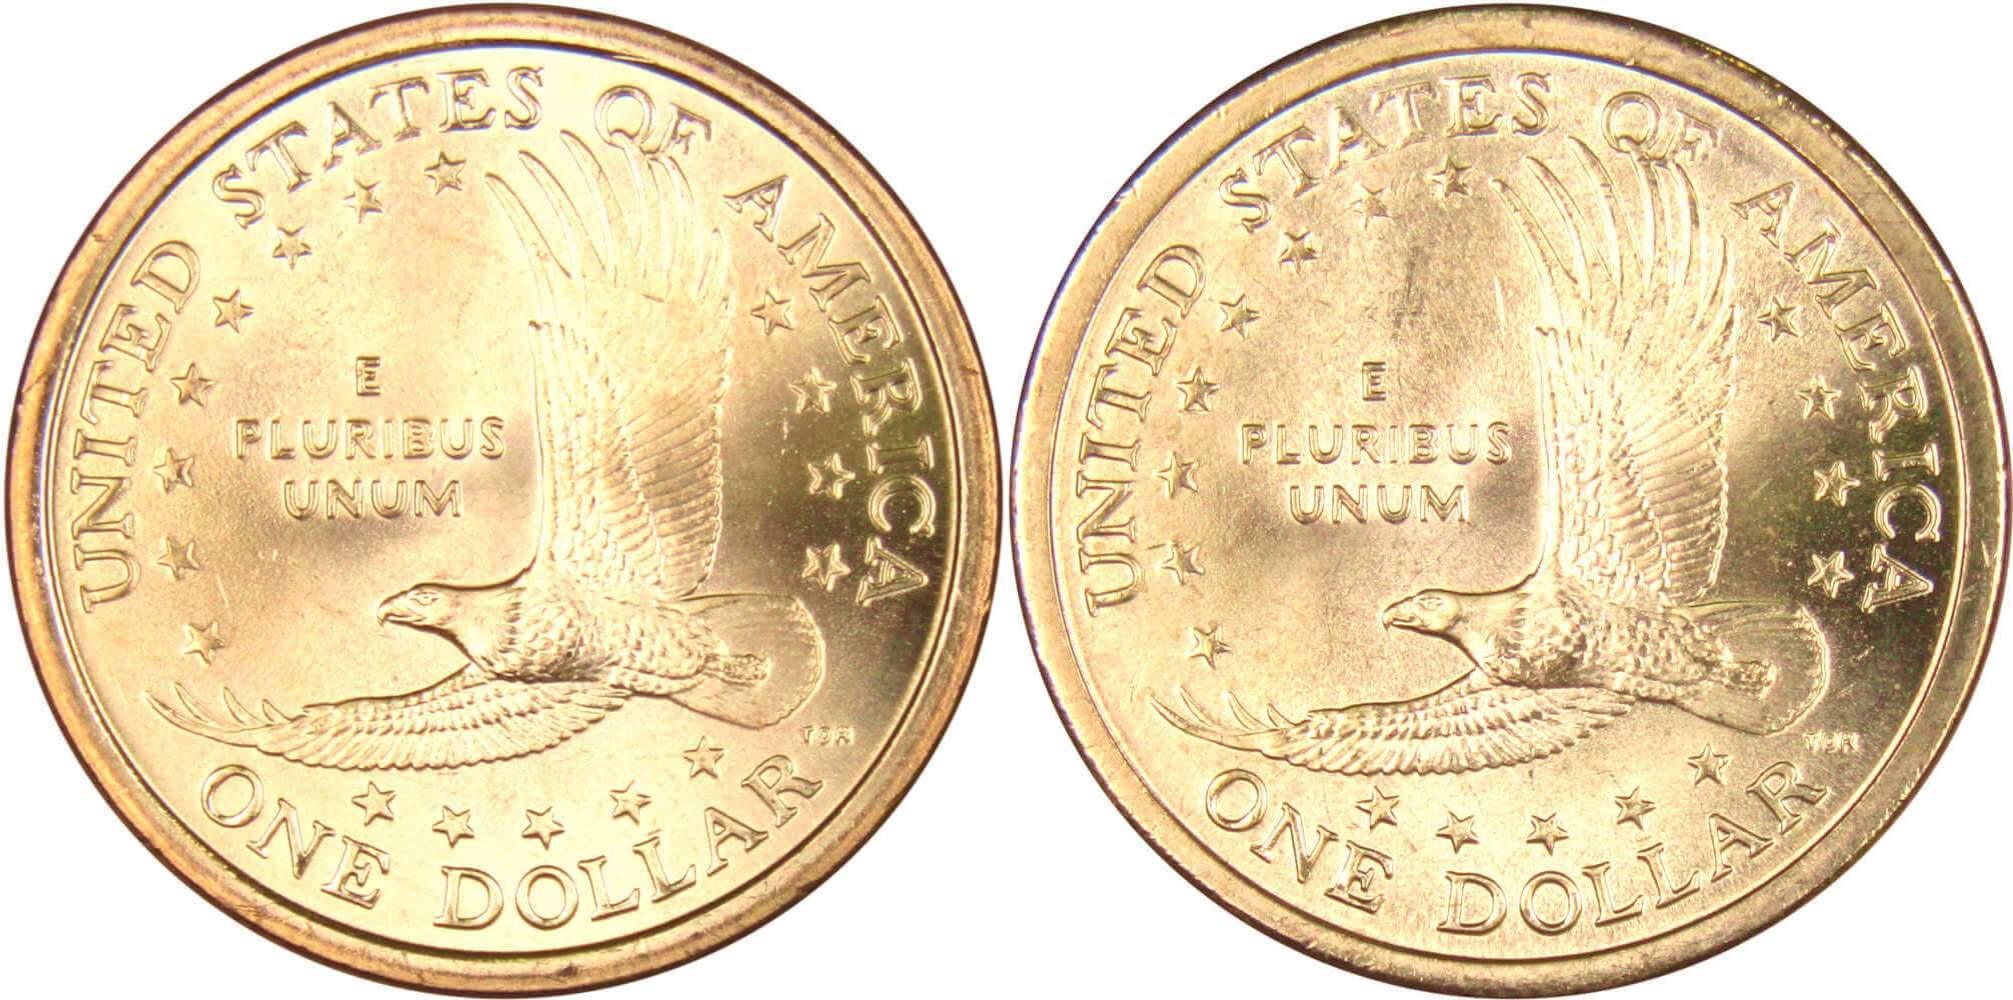 2005 P&D Sacagawea Native American Dollar 2 Coin Set BU Uncirculated $1